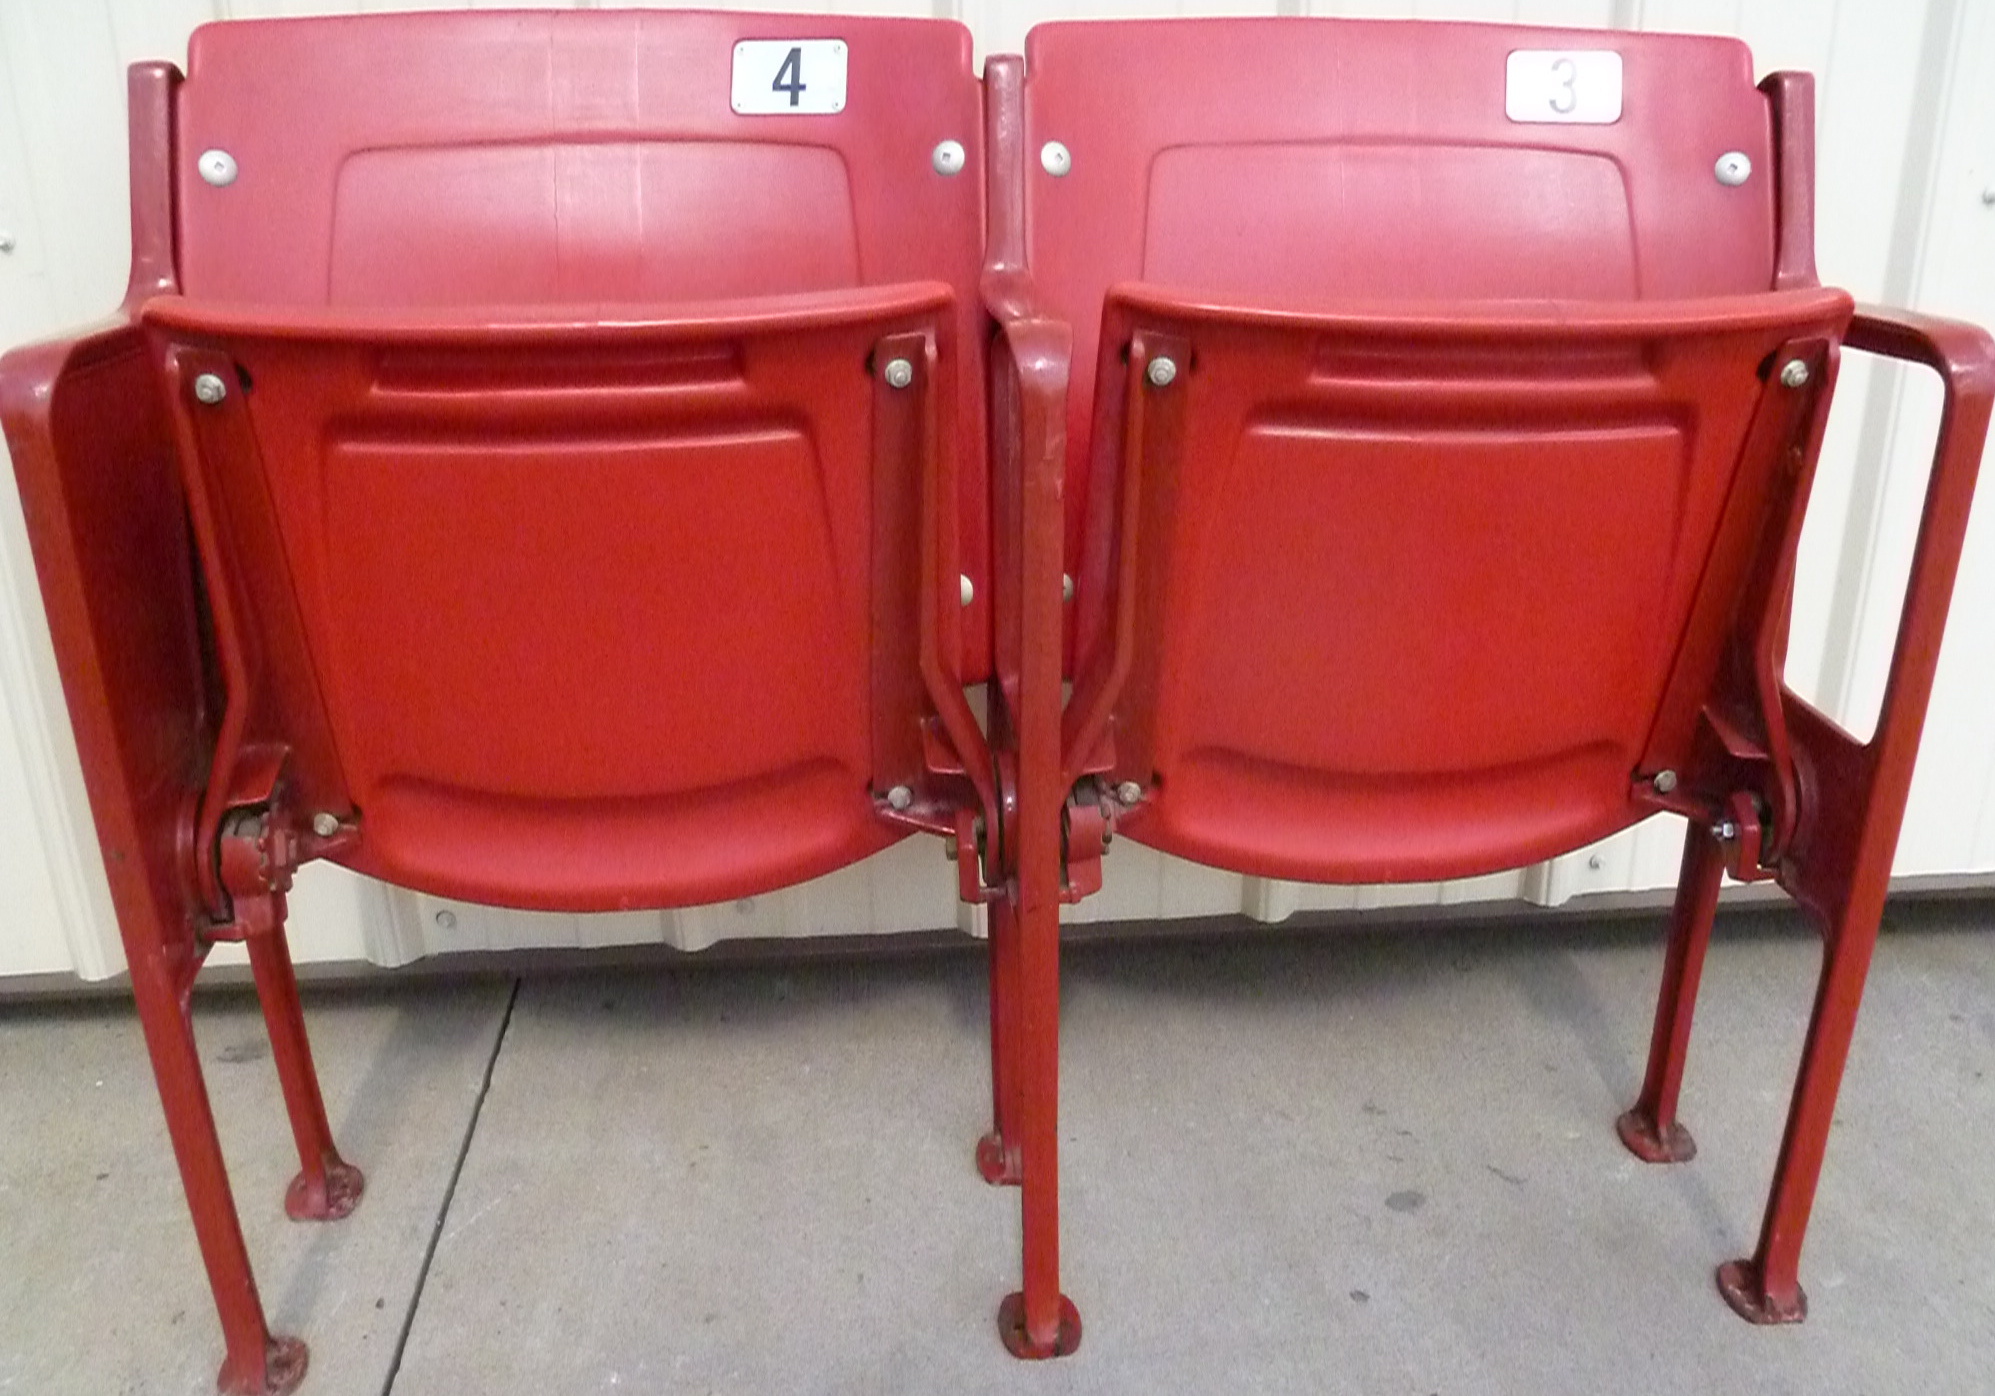 Busch Stadium seats - red floor mount